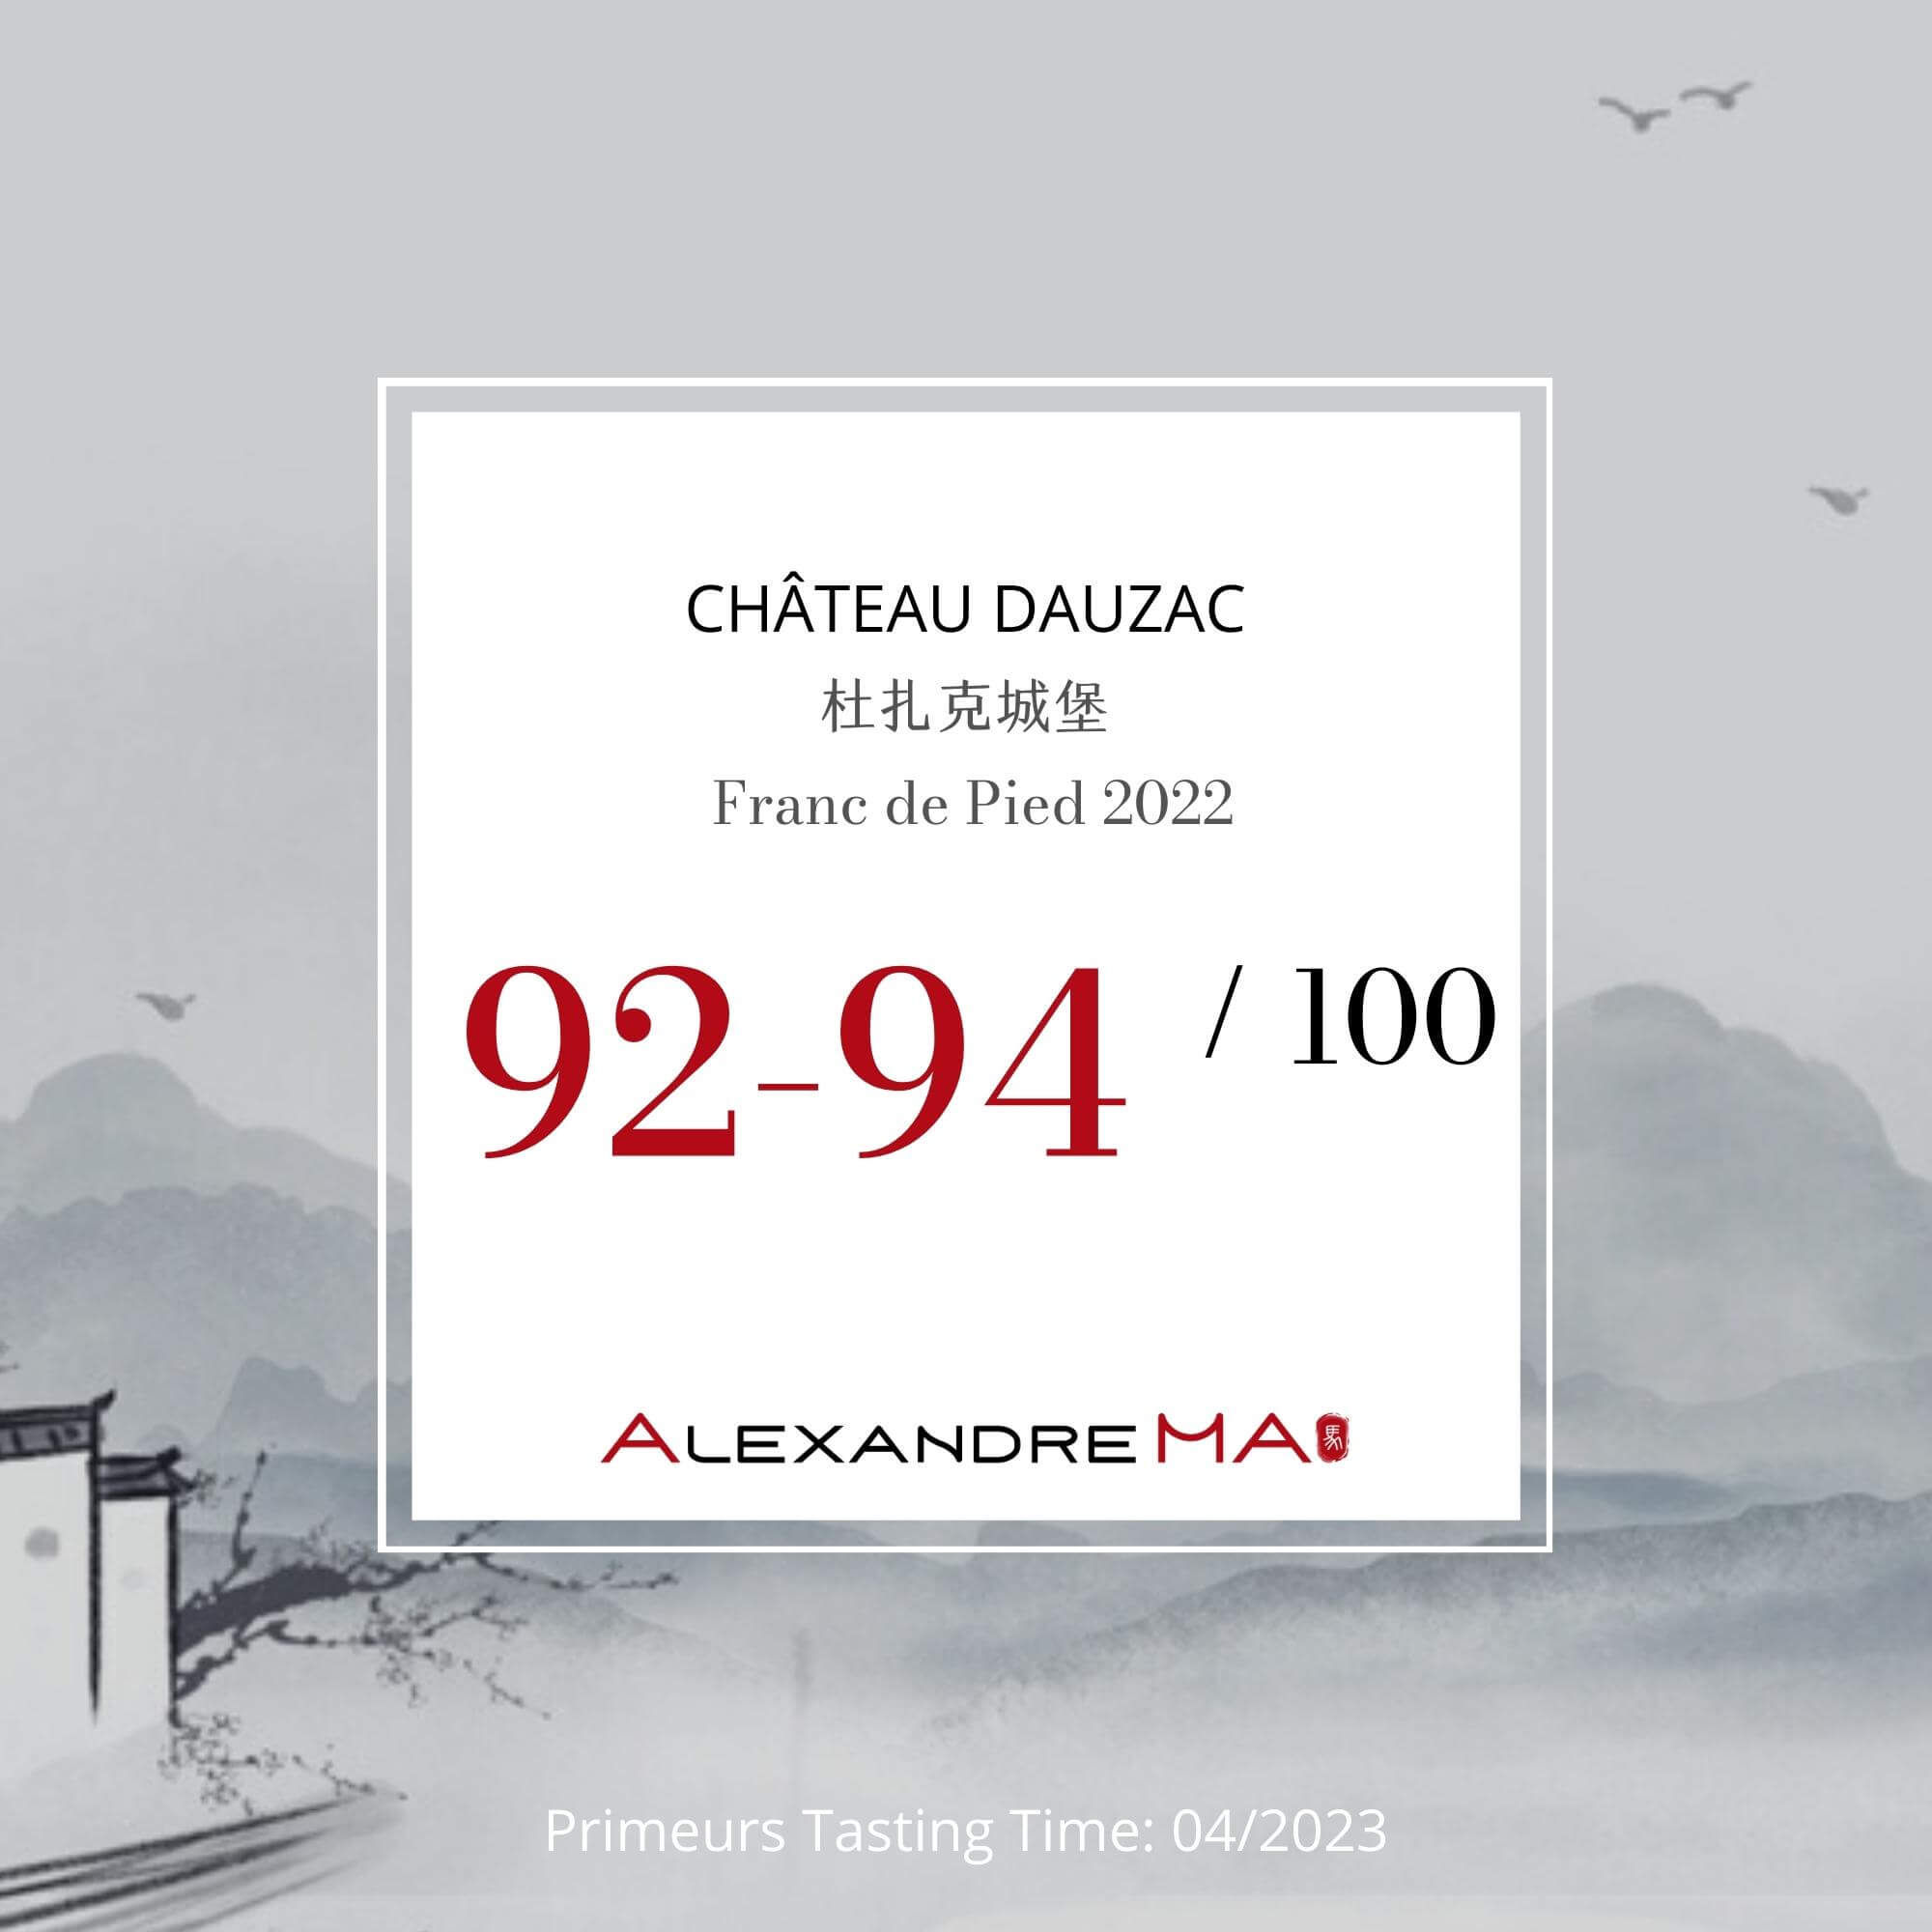 Château Dauzac – Franc de Pied 2022 Primeurs - Alexandre MA